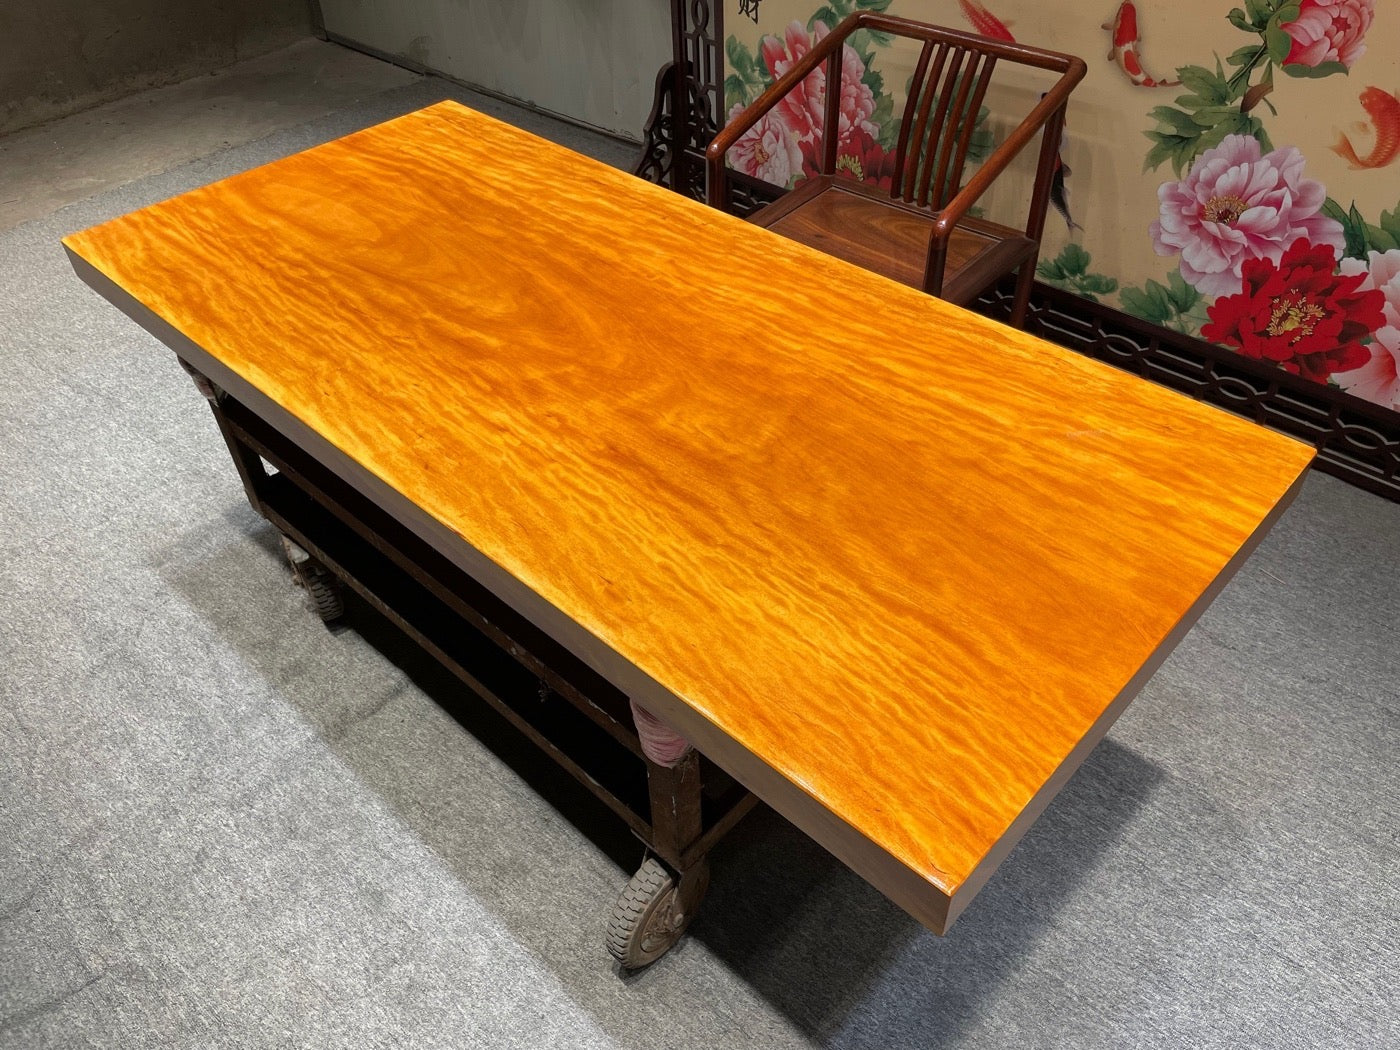 Escritorio de comedor personalizado de madera natural, mesa de color naranja